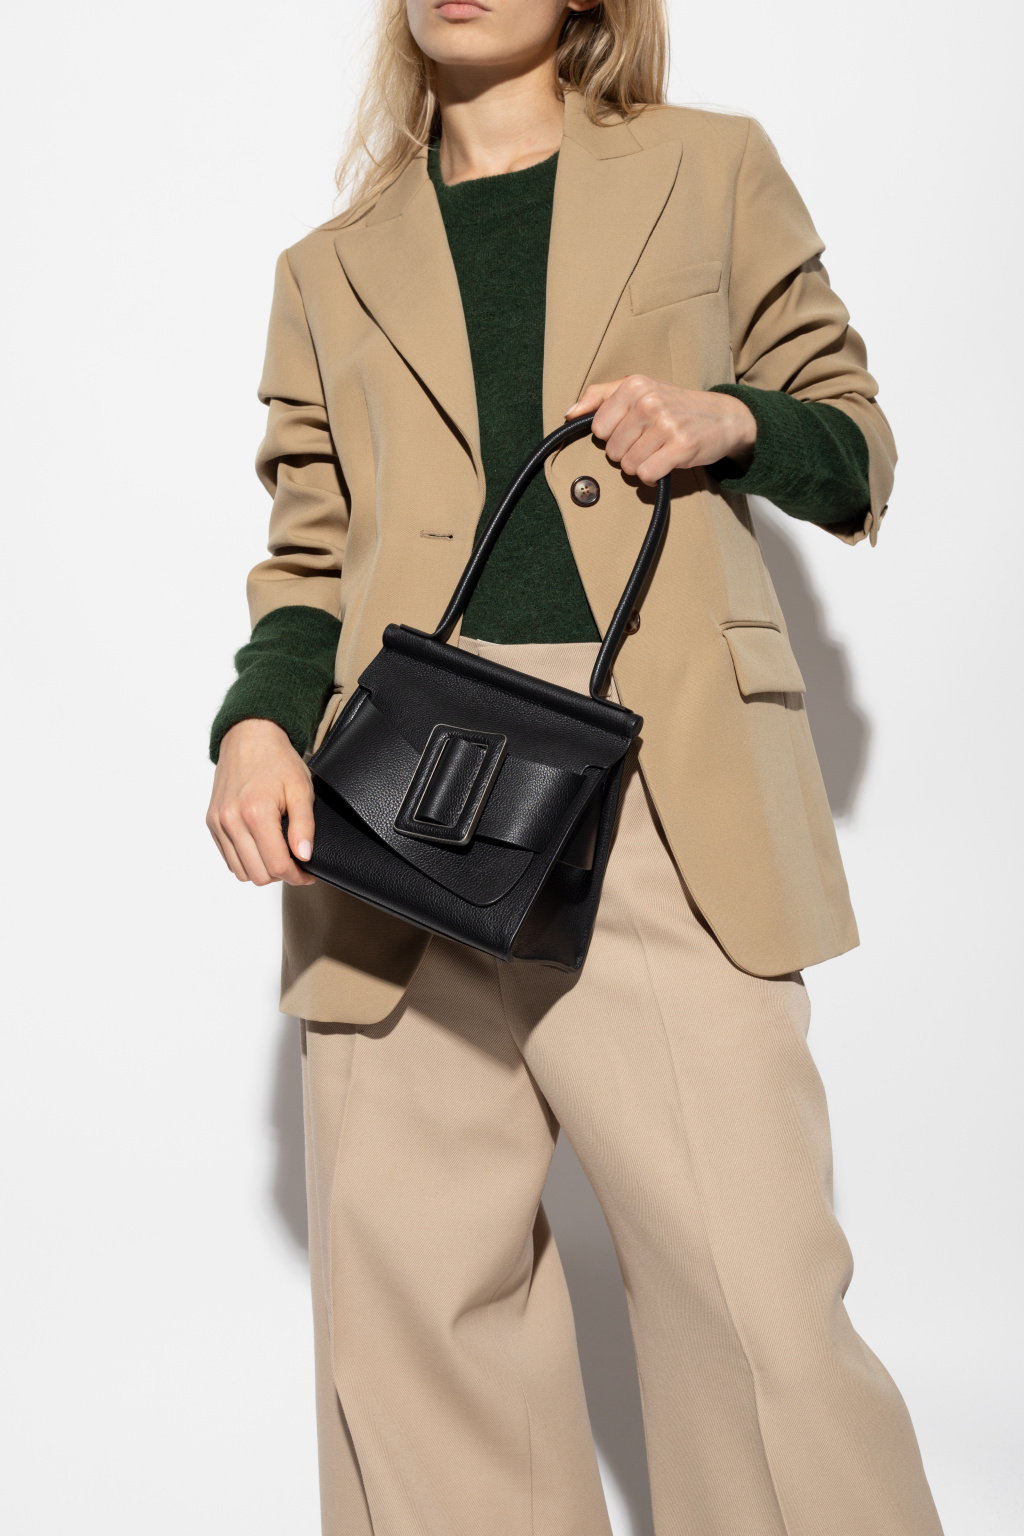 BOYY 'Karl 19' handbag, Women's Bags